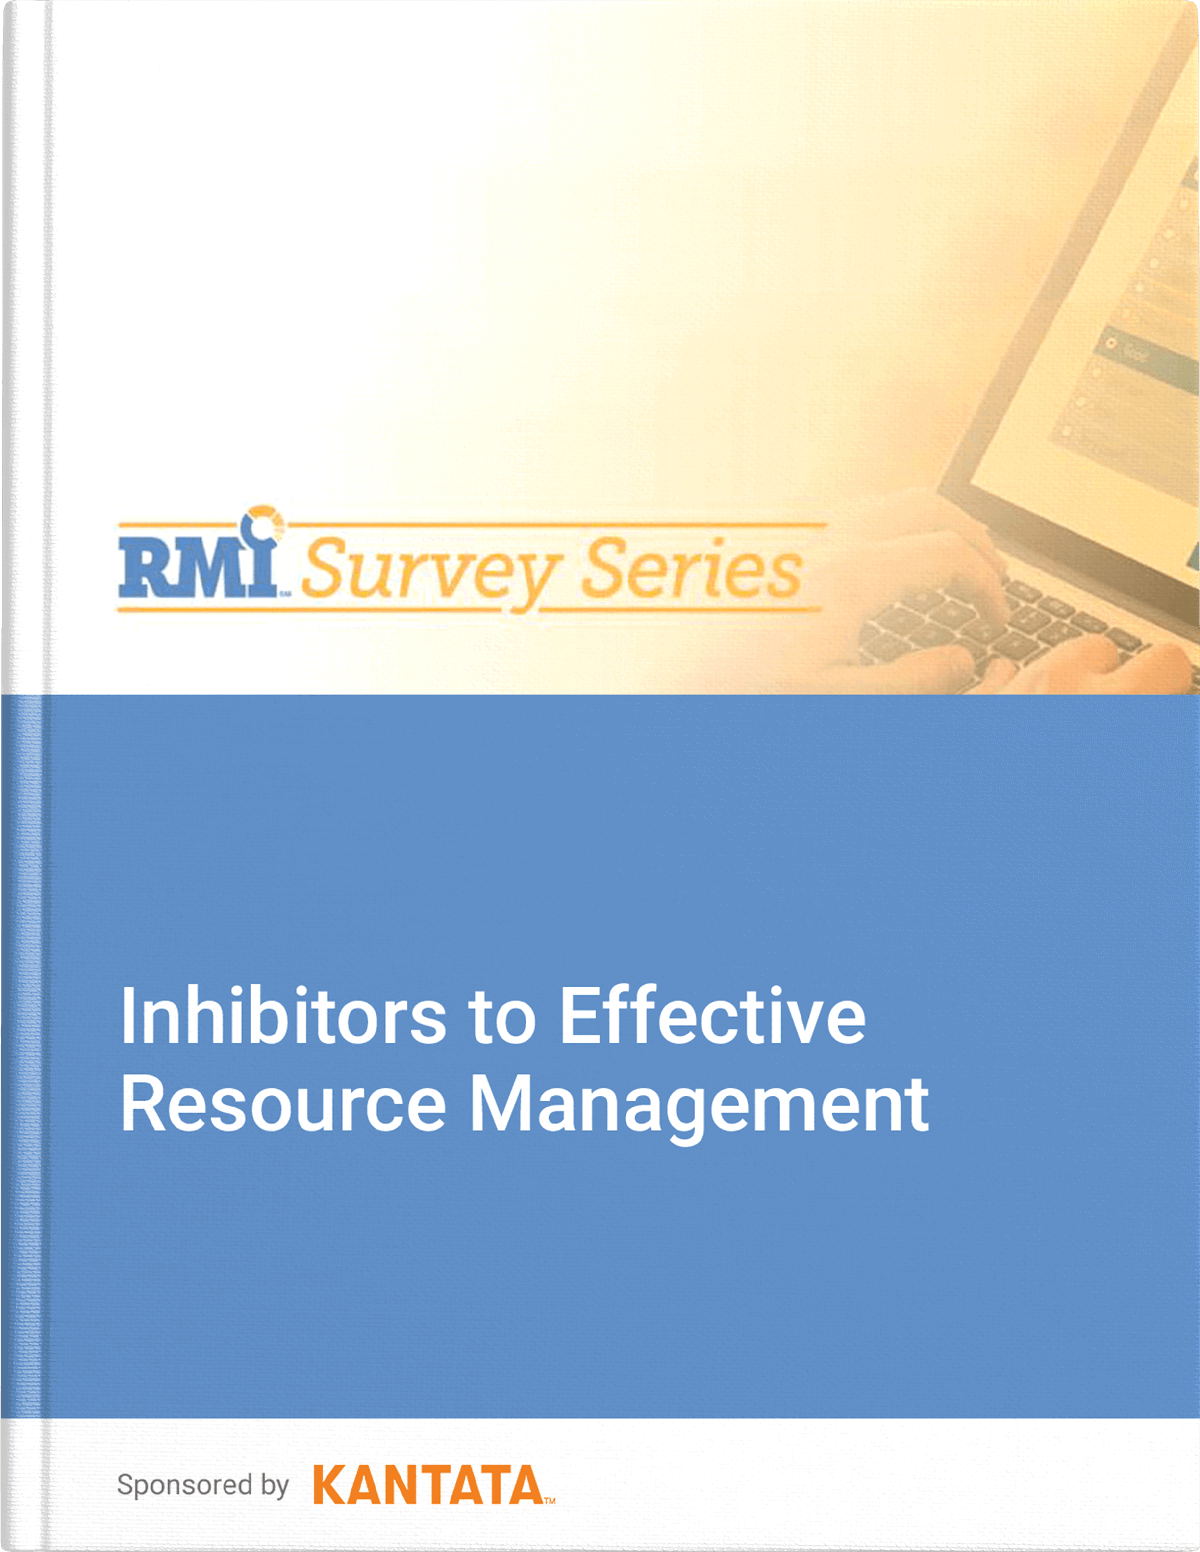 RMI Survey Series: Inhibitors to Effective Resource Management